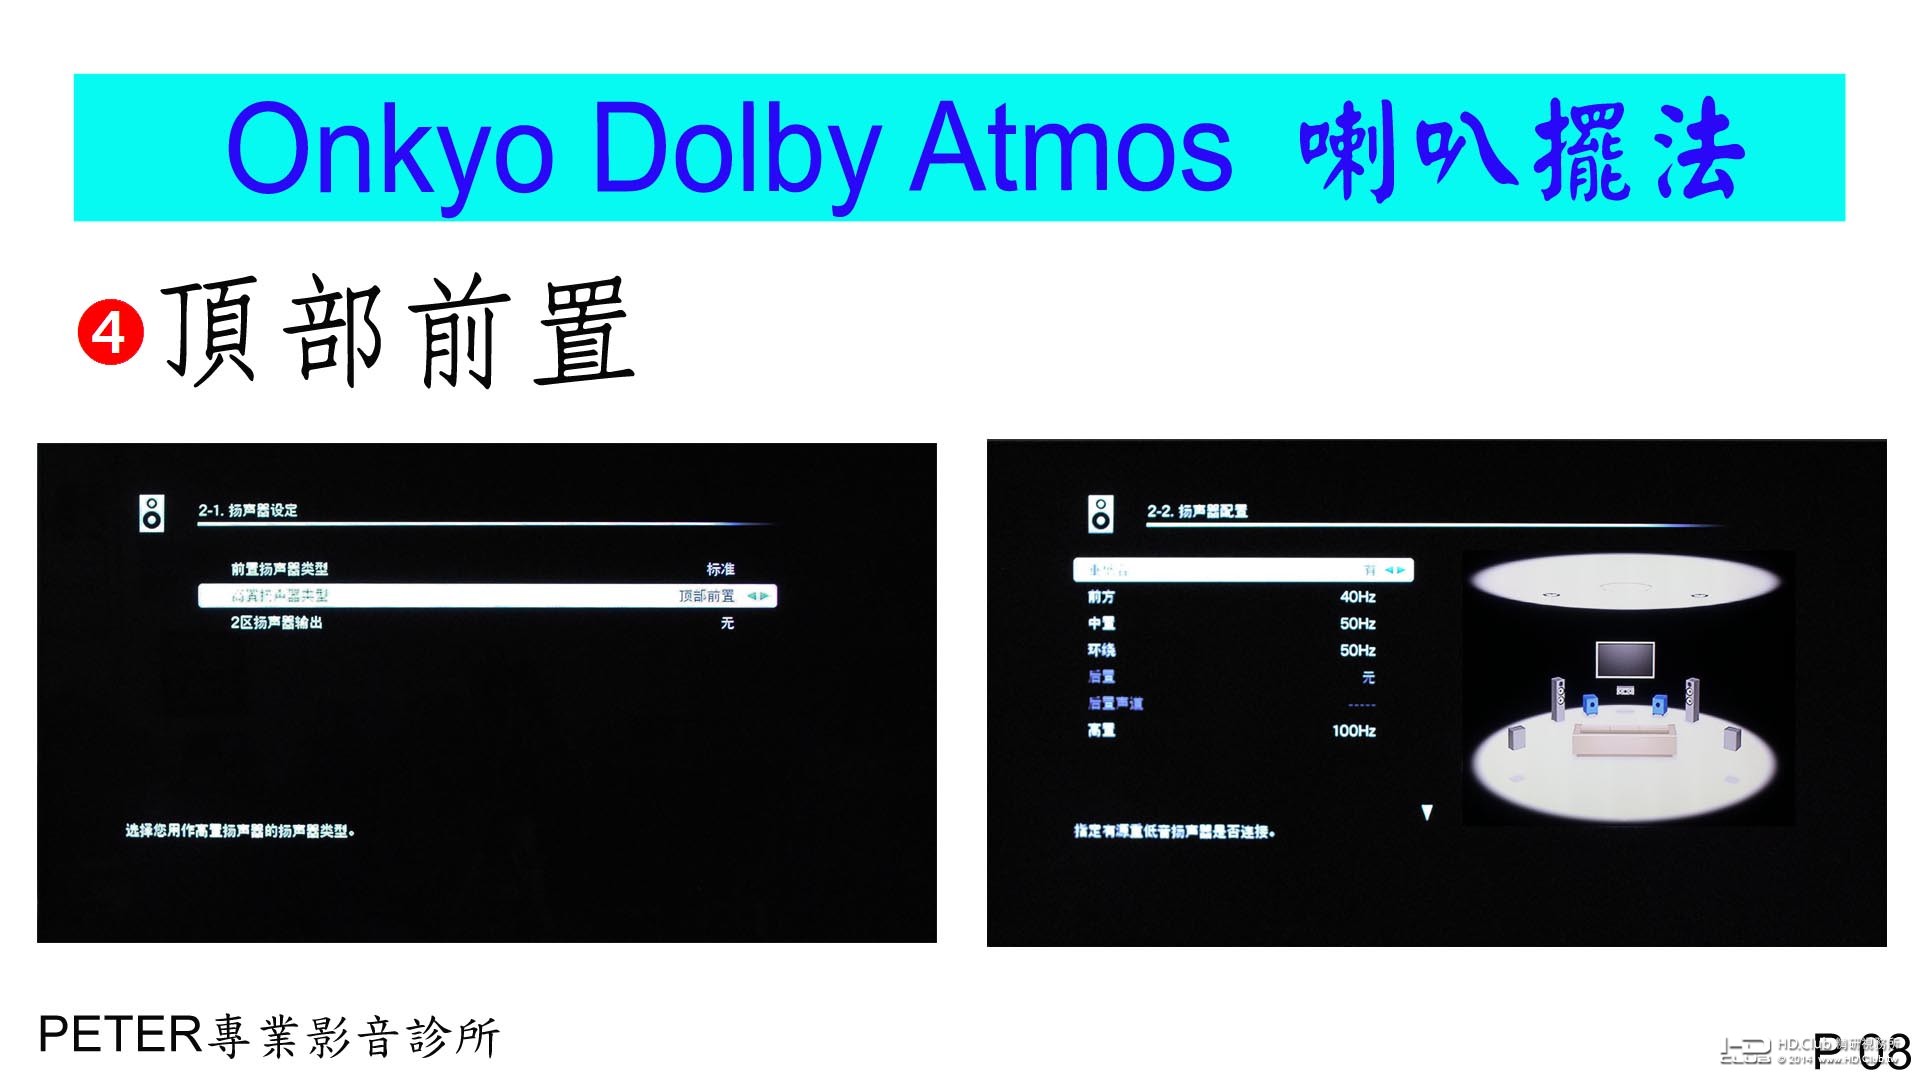 08 Onkyo Dolby Atmos 喇叭擺法.jpg